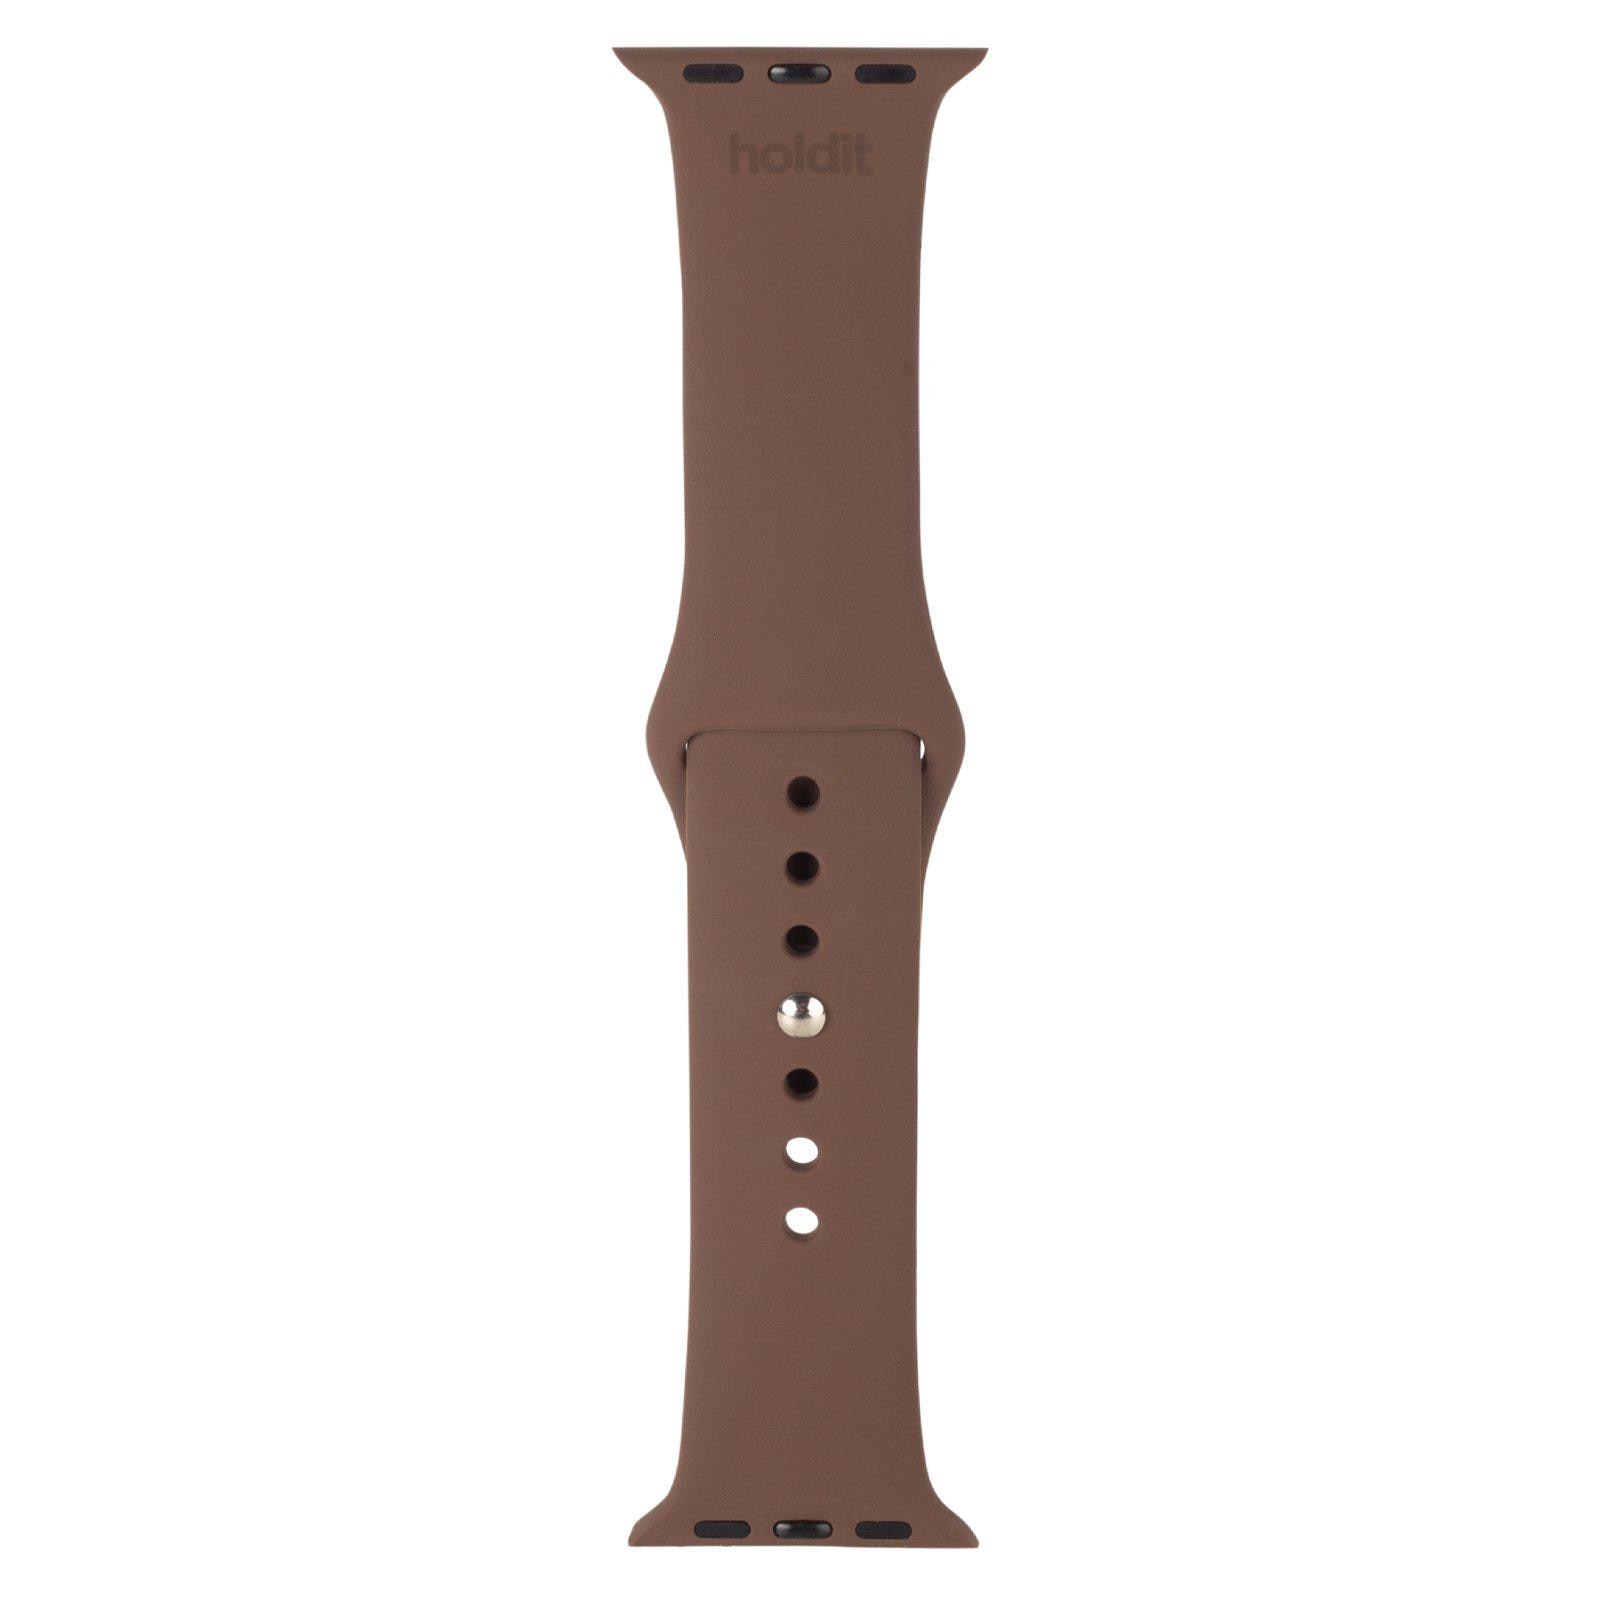 Bracelet en silicone Apple Watch 44mm, Dark Brown